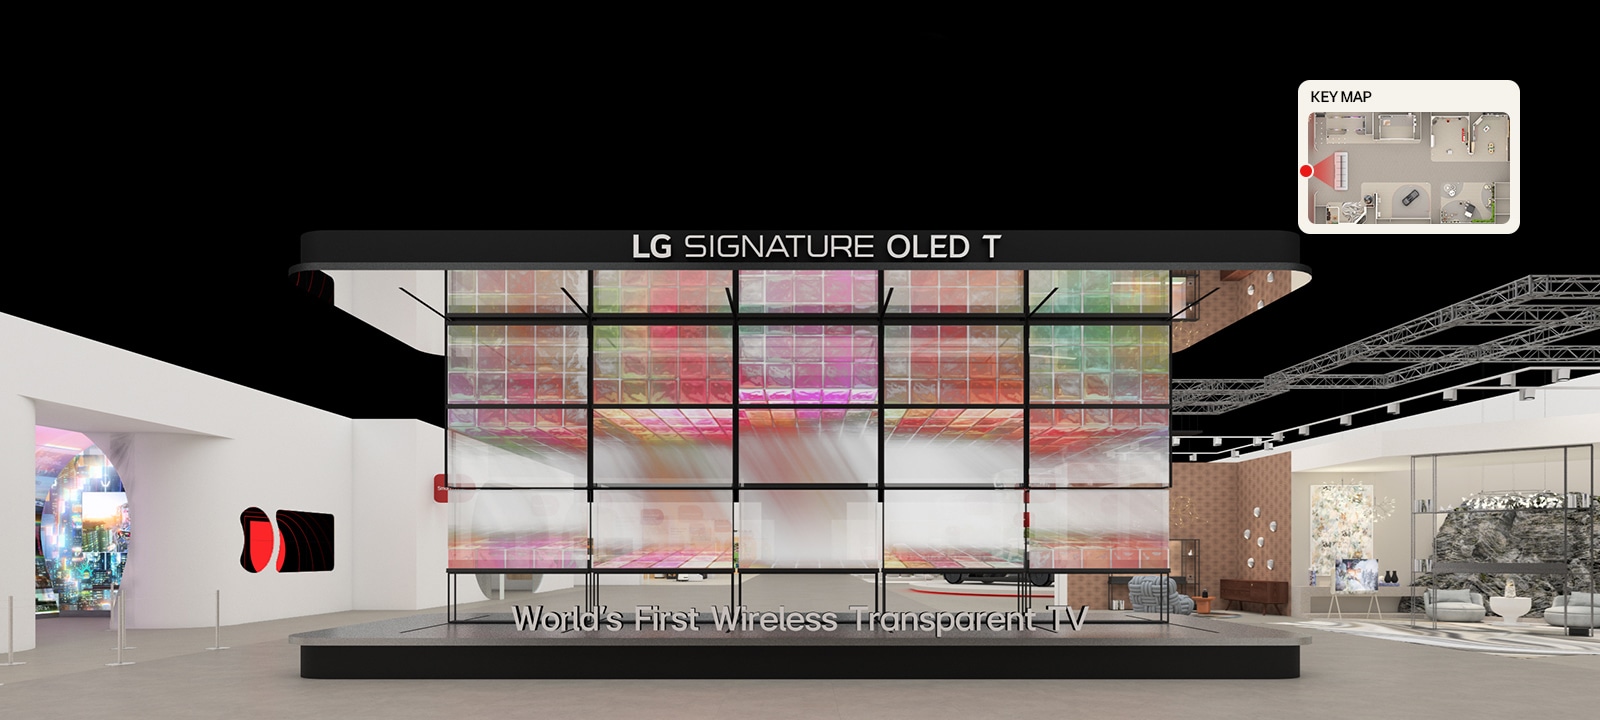 LG SIGNATURE OLED T Hero booth image